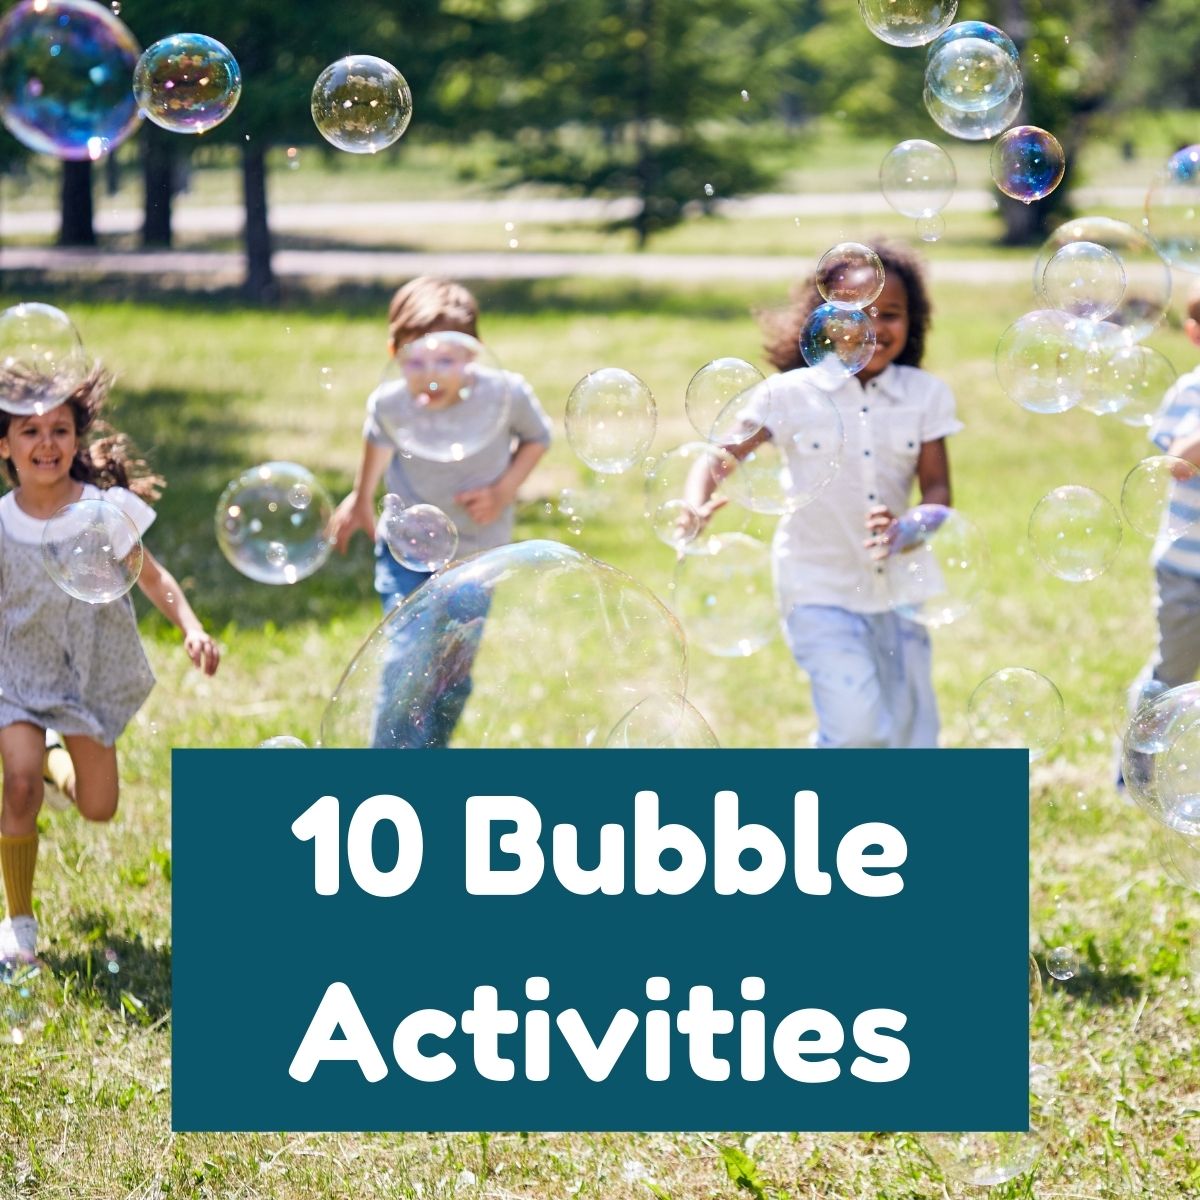 Children running after bubbles